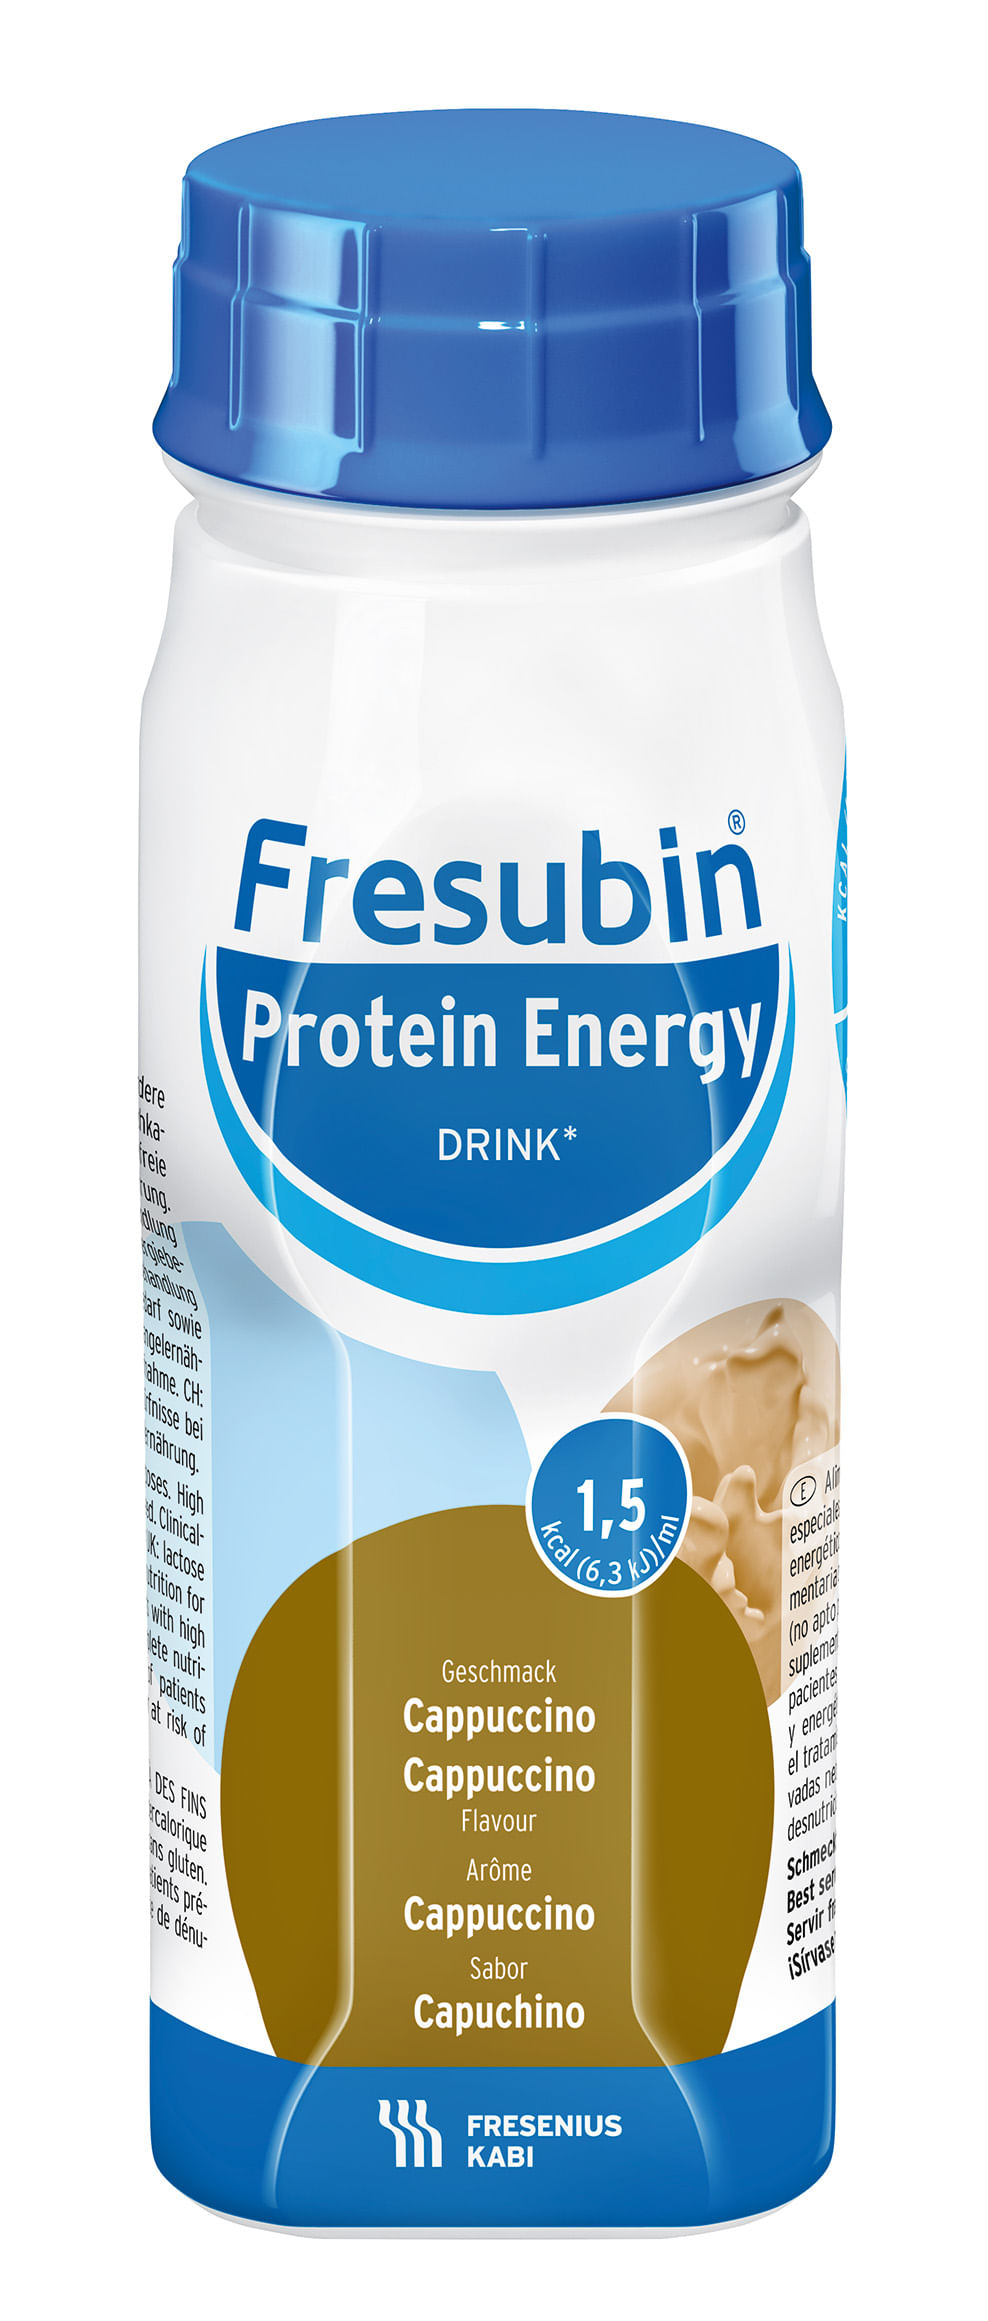 Fresubin_Protein_Energy_Cappuccino_EBo_Frontal